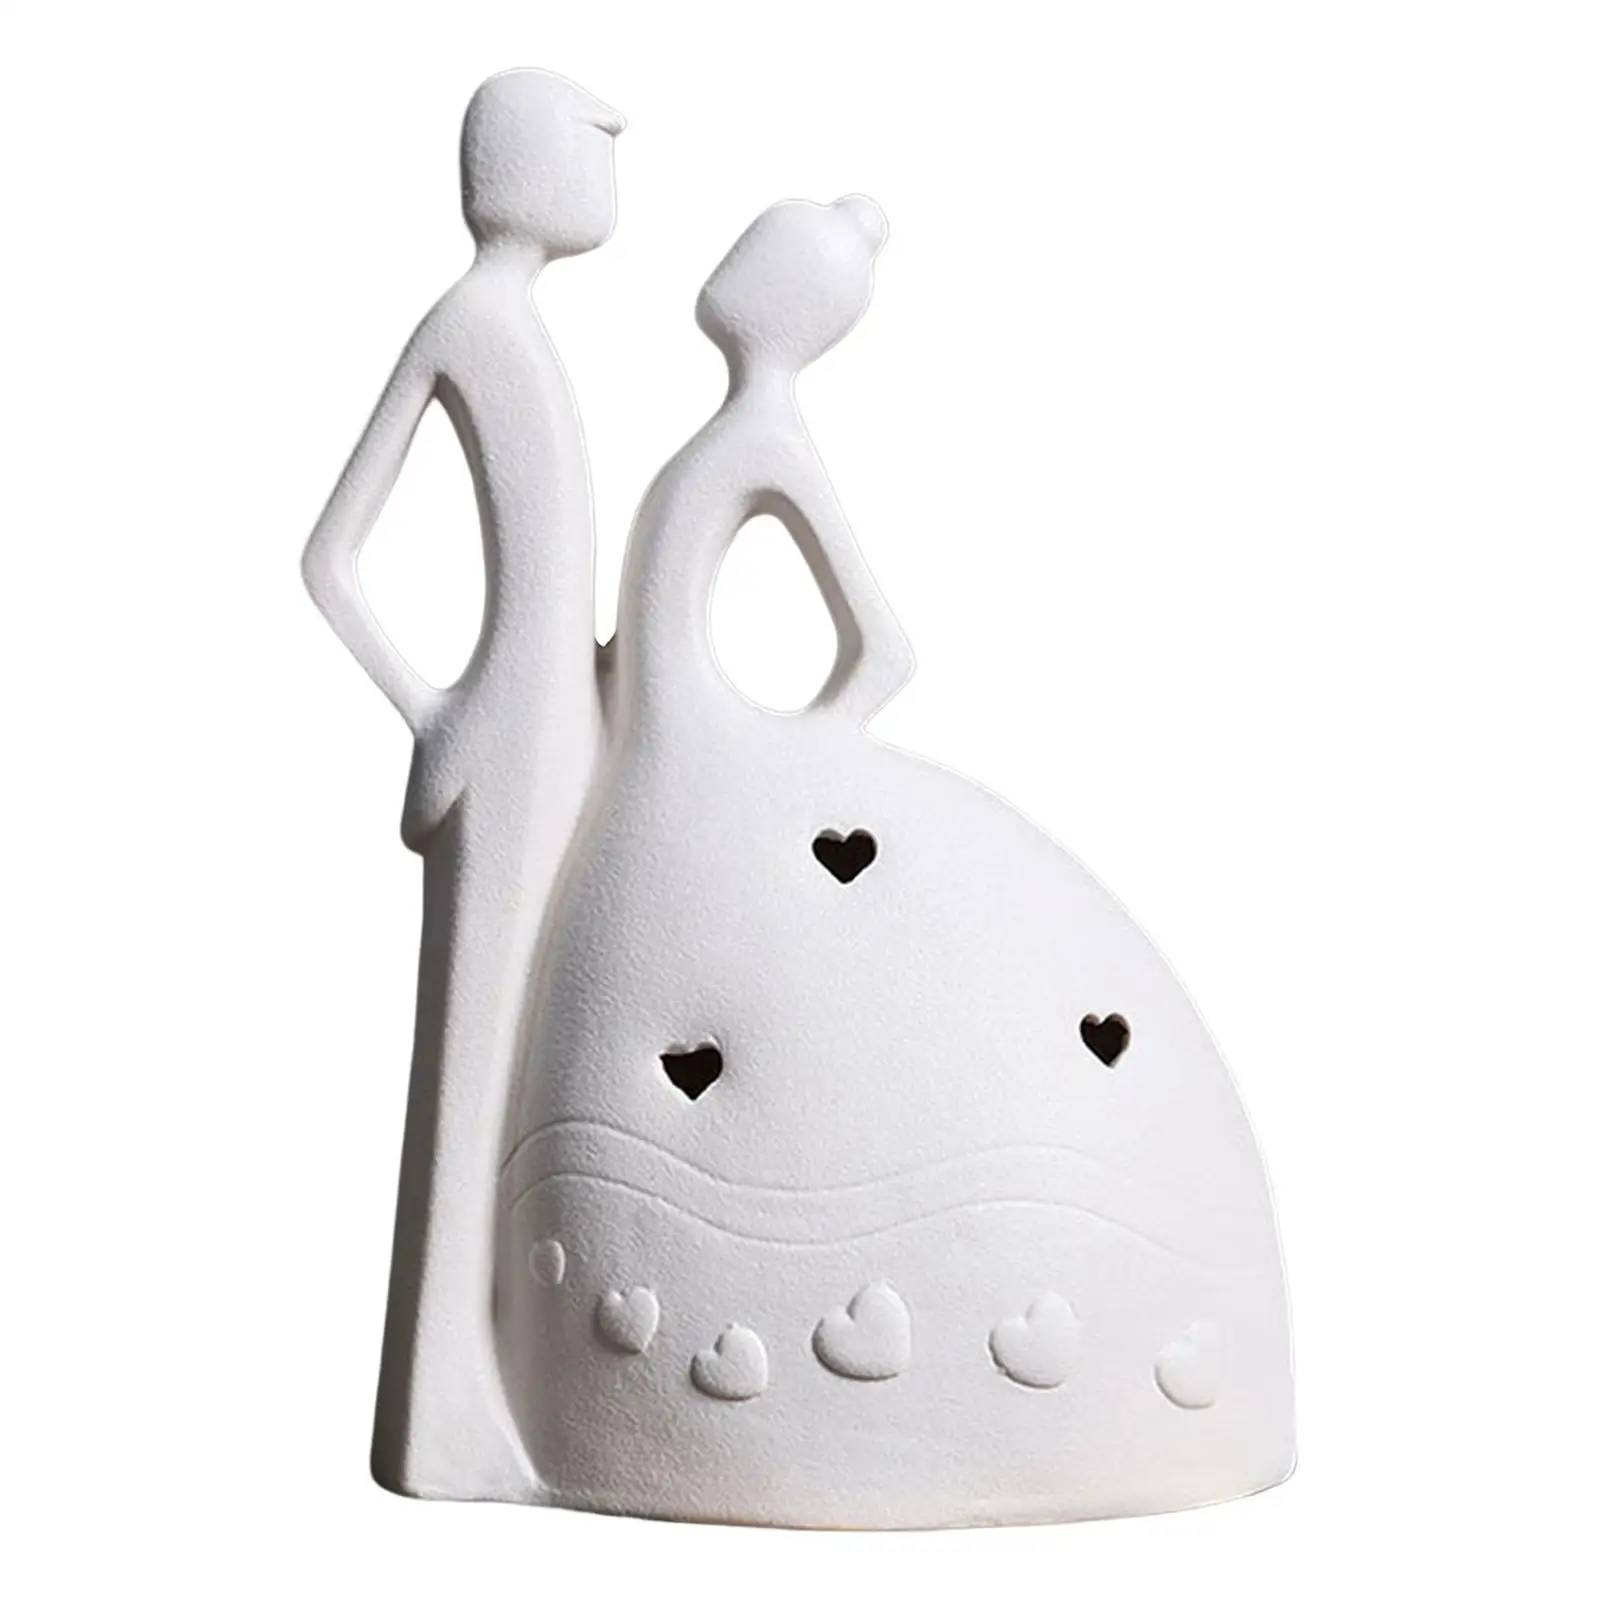 Lover Statue Romantic Decorative Passionate Art Crafts Ornament Couple Figurine for Cabinet Tabletop Home wedding Decoration